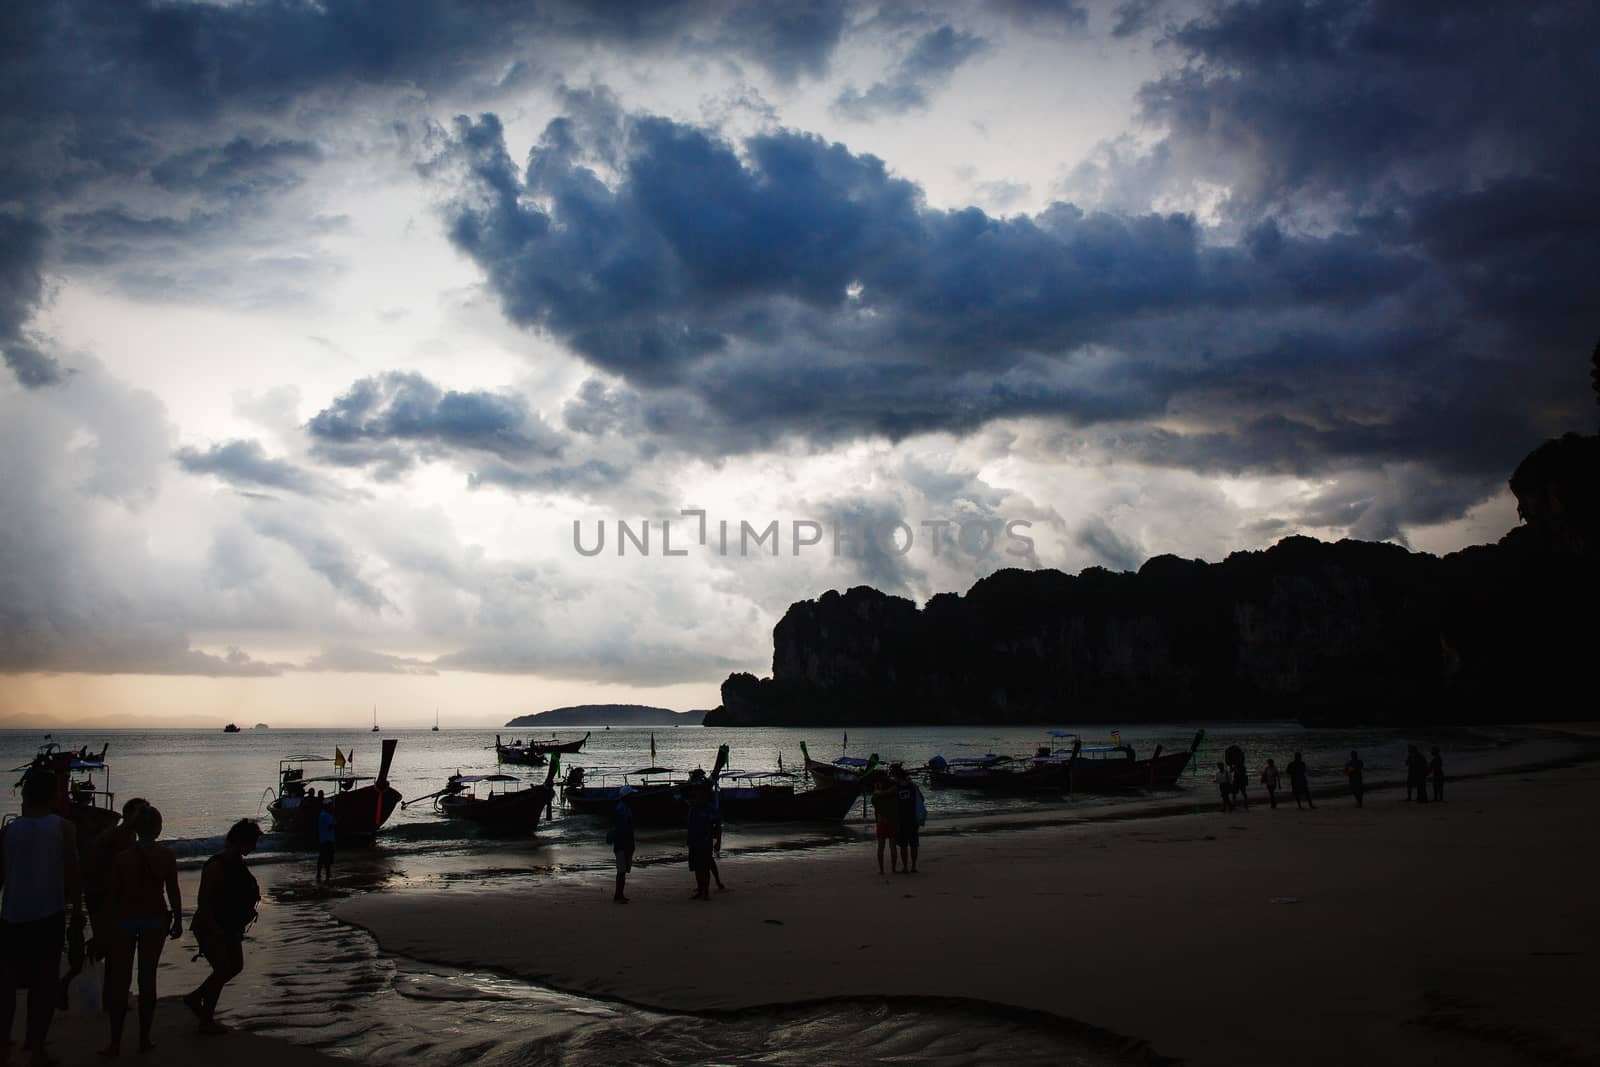 A beautiful rocky beach in asia. Thailand.